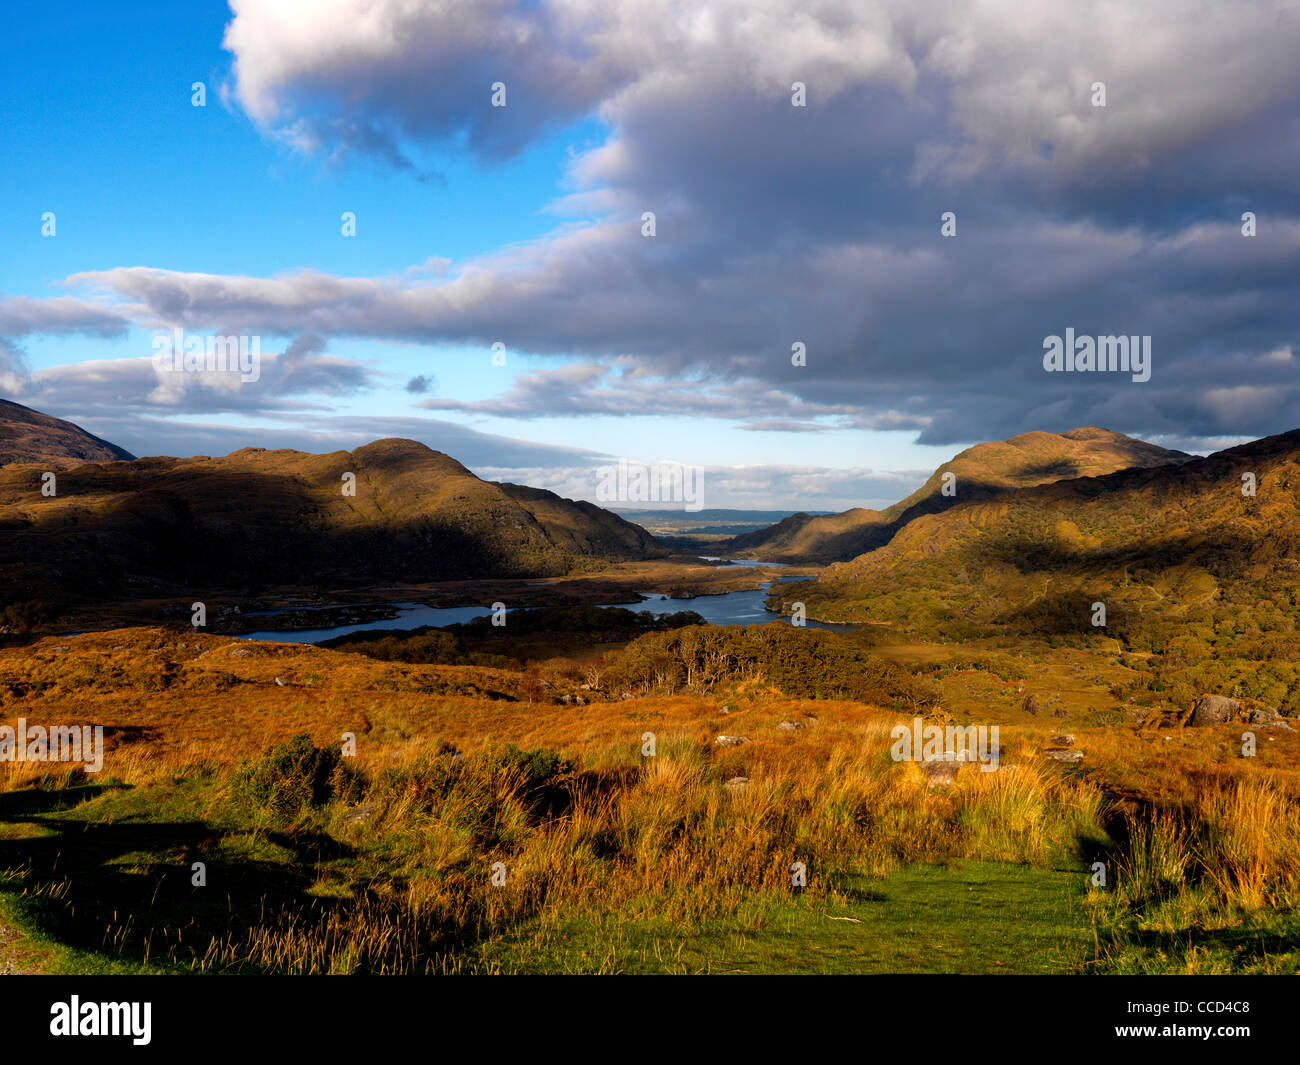 Lady's View, obere Seen, Killarney Nationalpark, Co. Kerry. Stockfoto